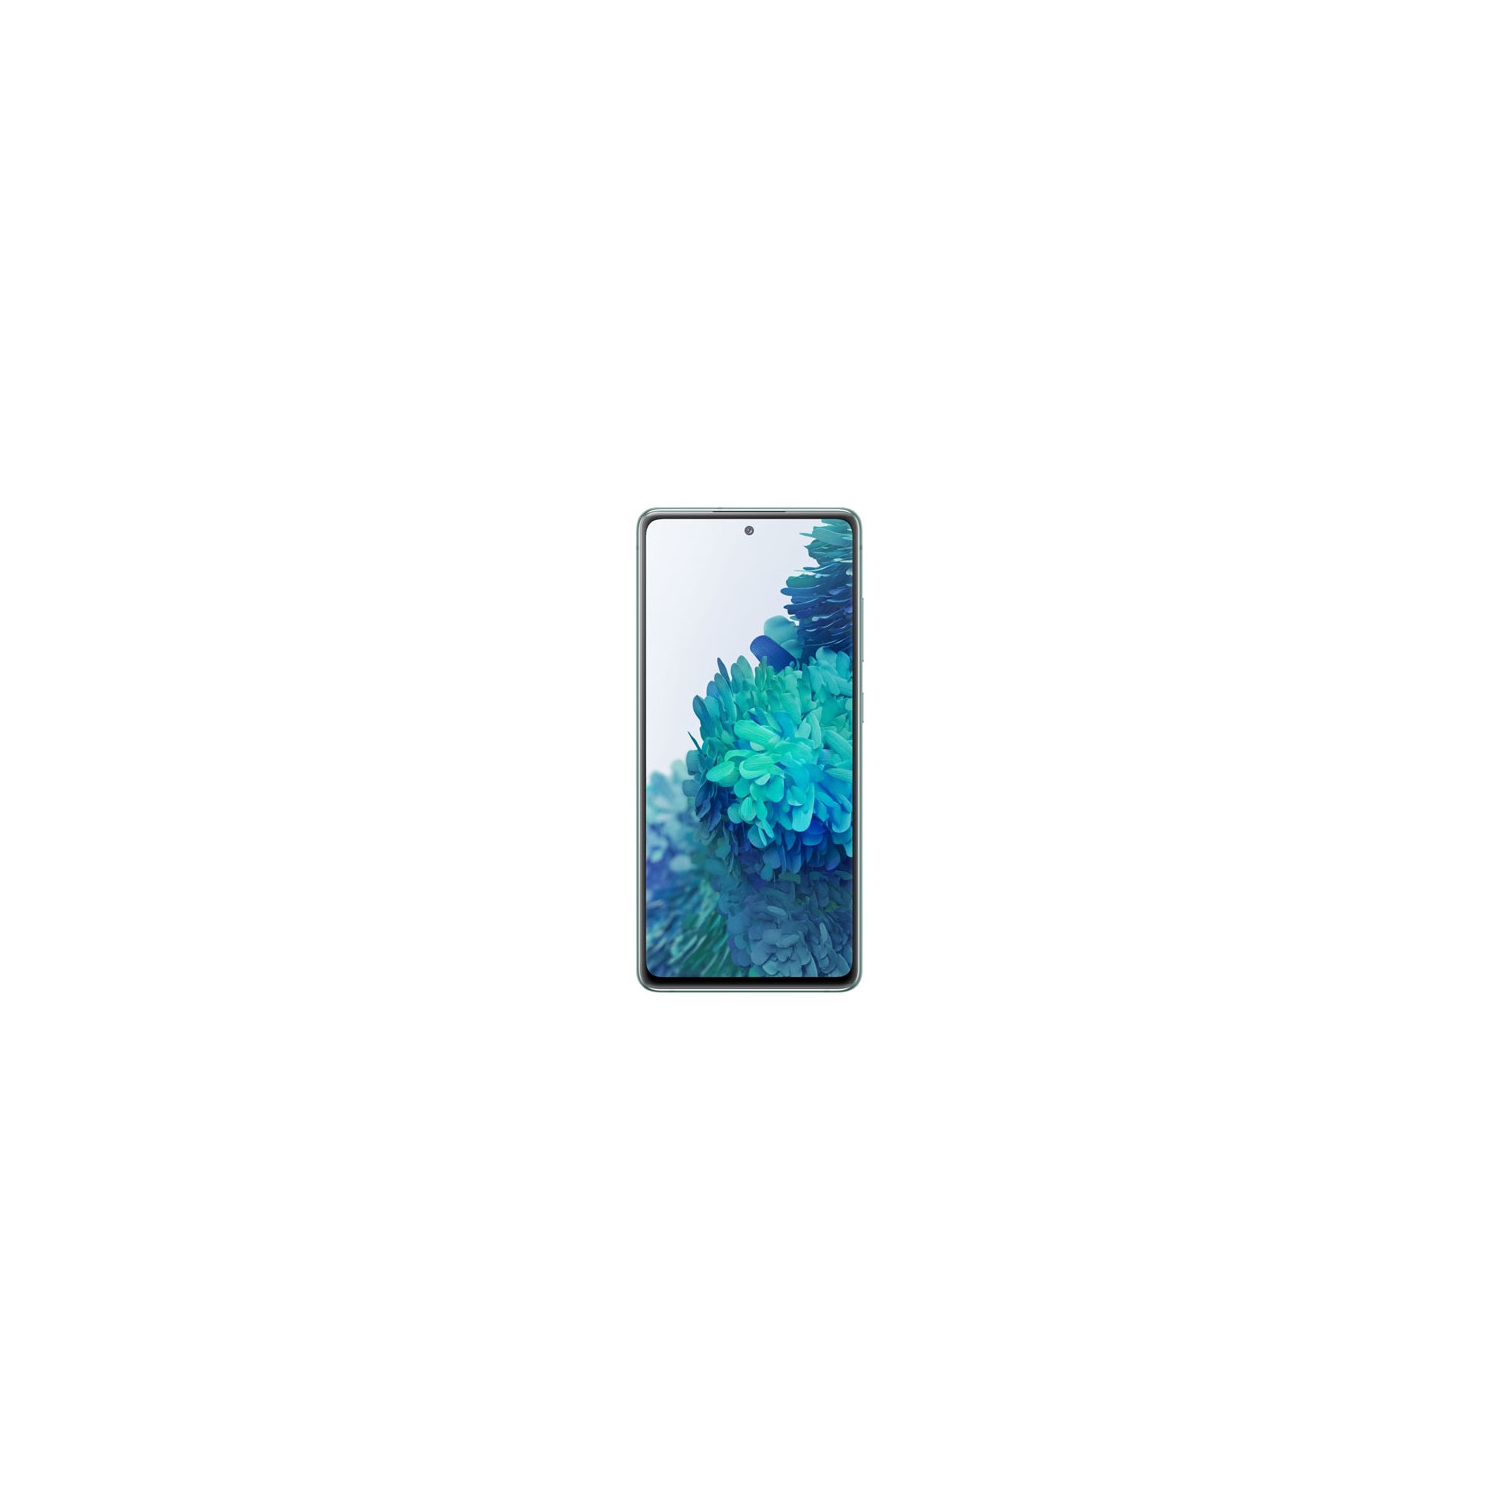 Refurbished (Fair) - Samsung Galaxy S20 FE 5G 128GB Smartphone - Cloud Mint - Unlocked